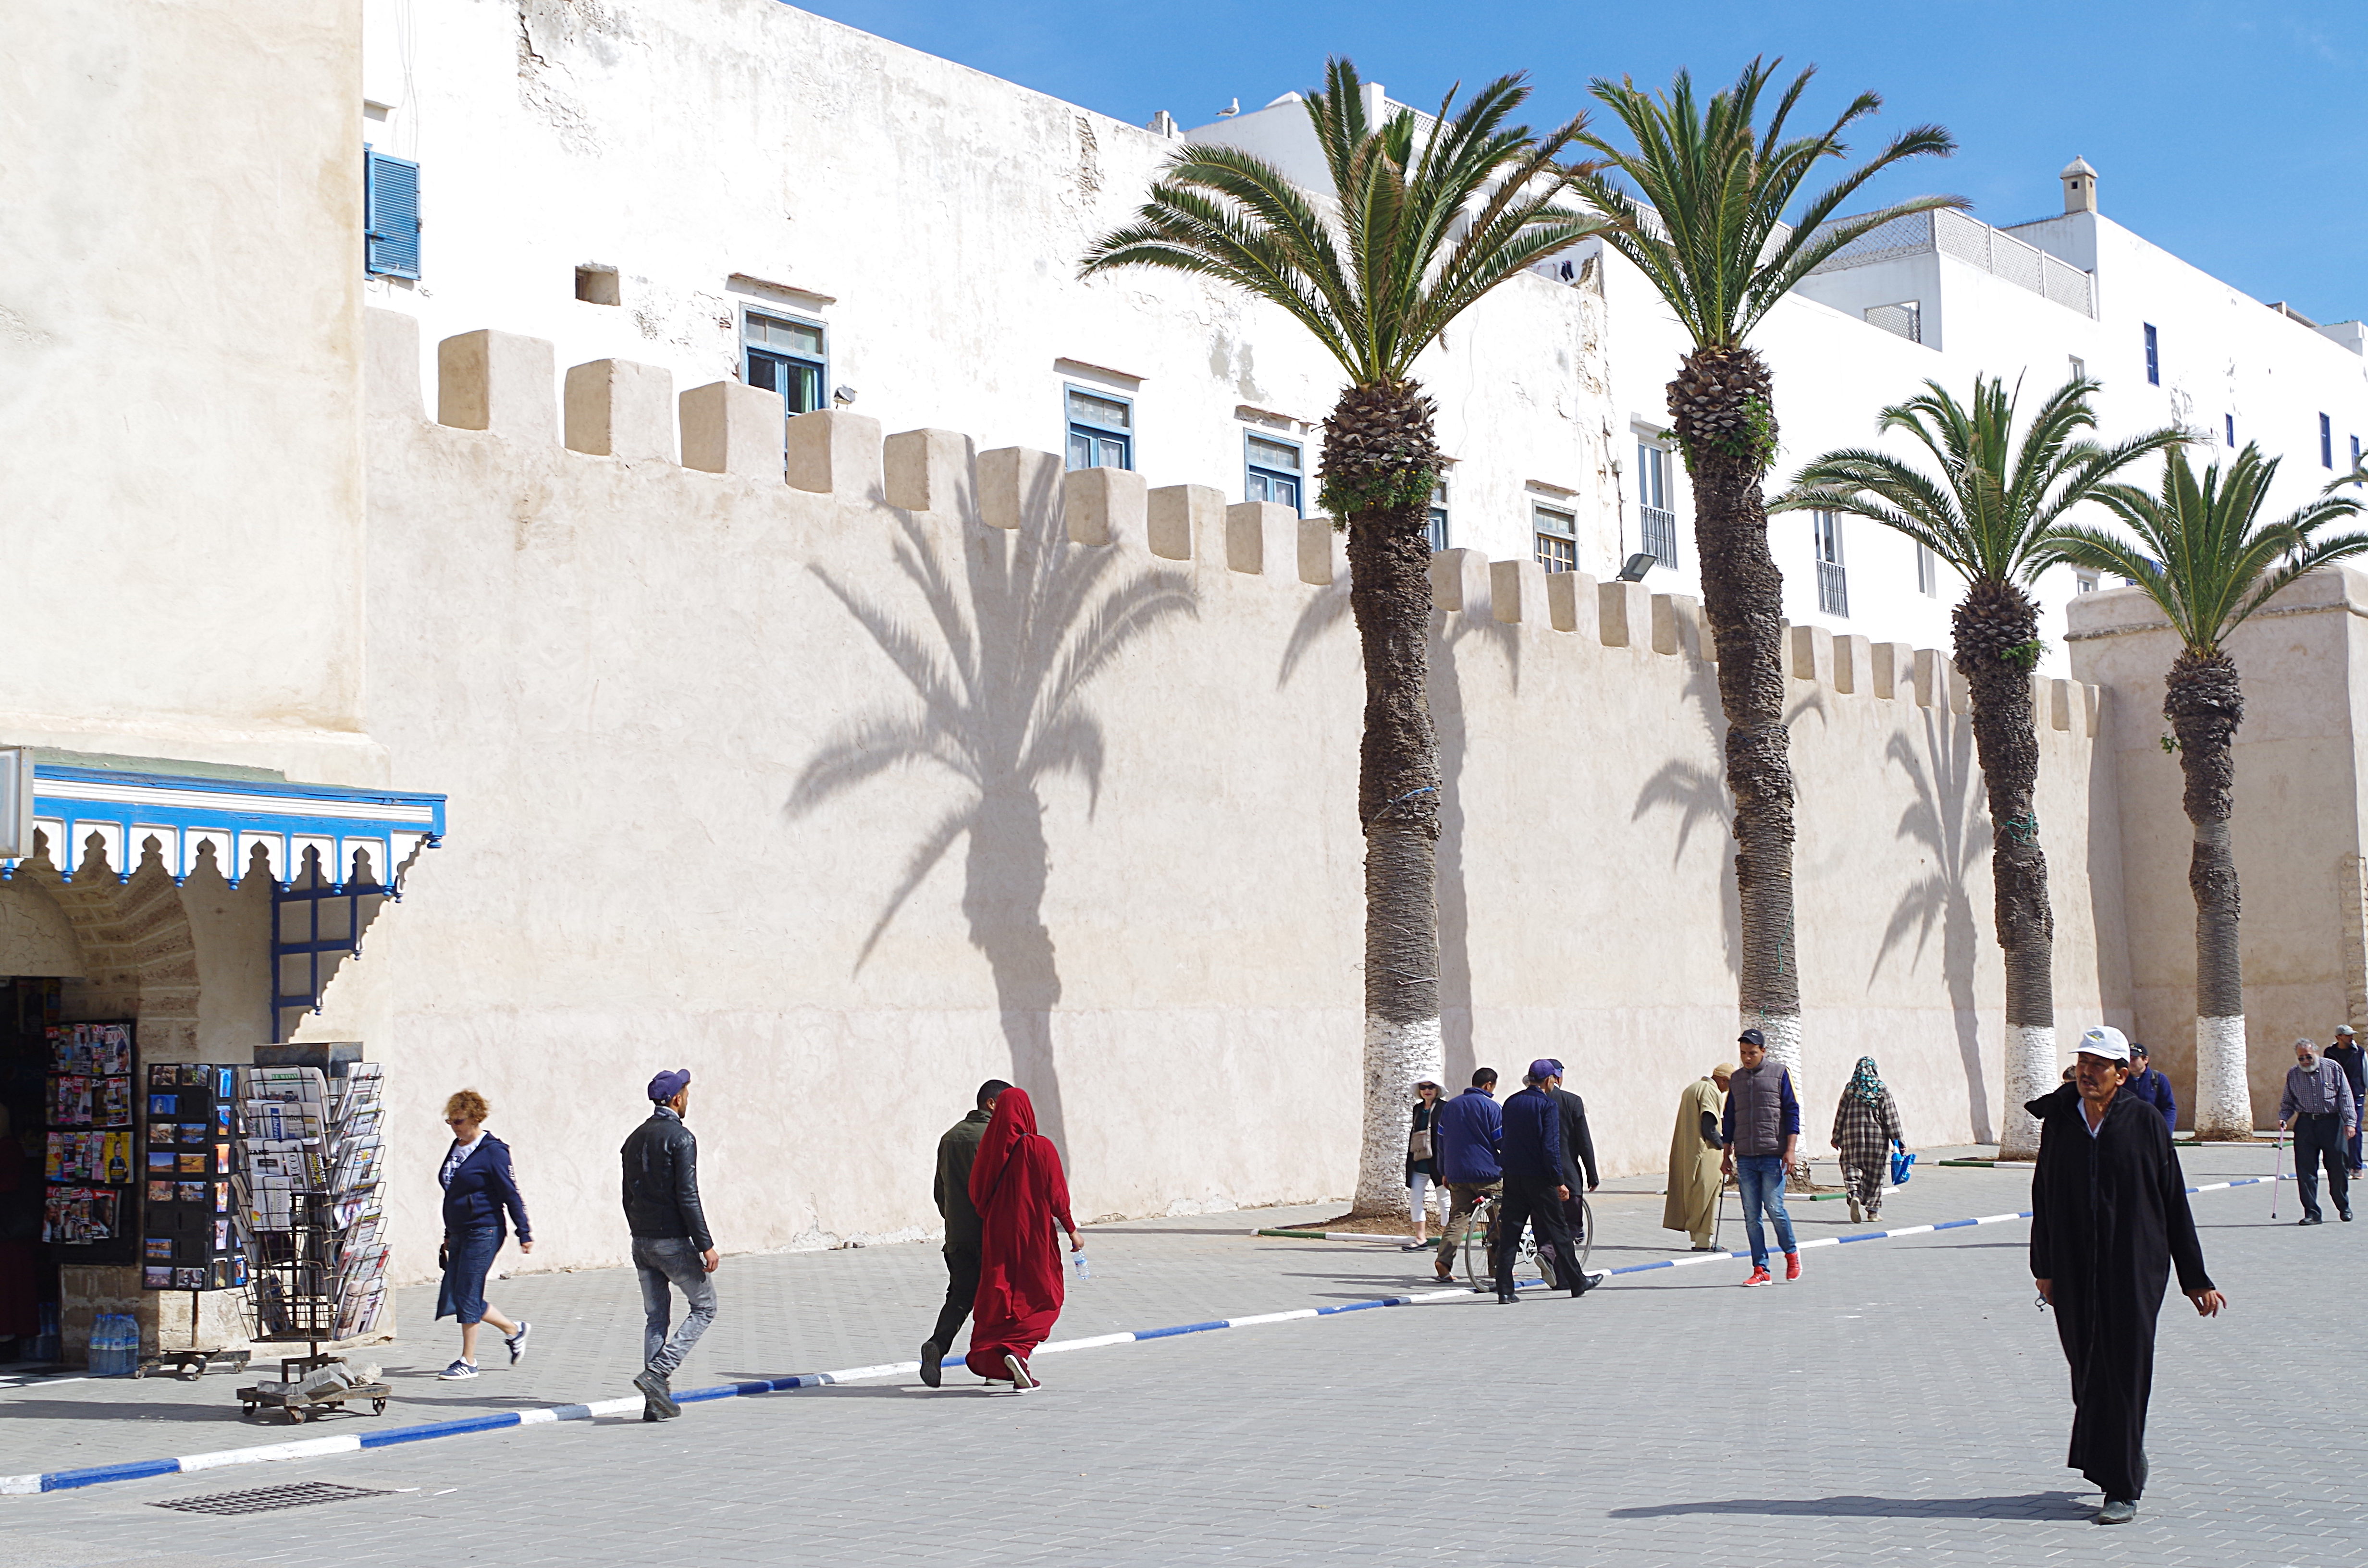 View of the medina walls close to the Bab Sbaa Gate in Essaouira, Morocco (photo: Claudia Mende)